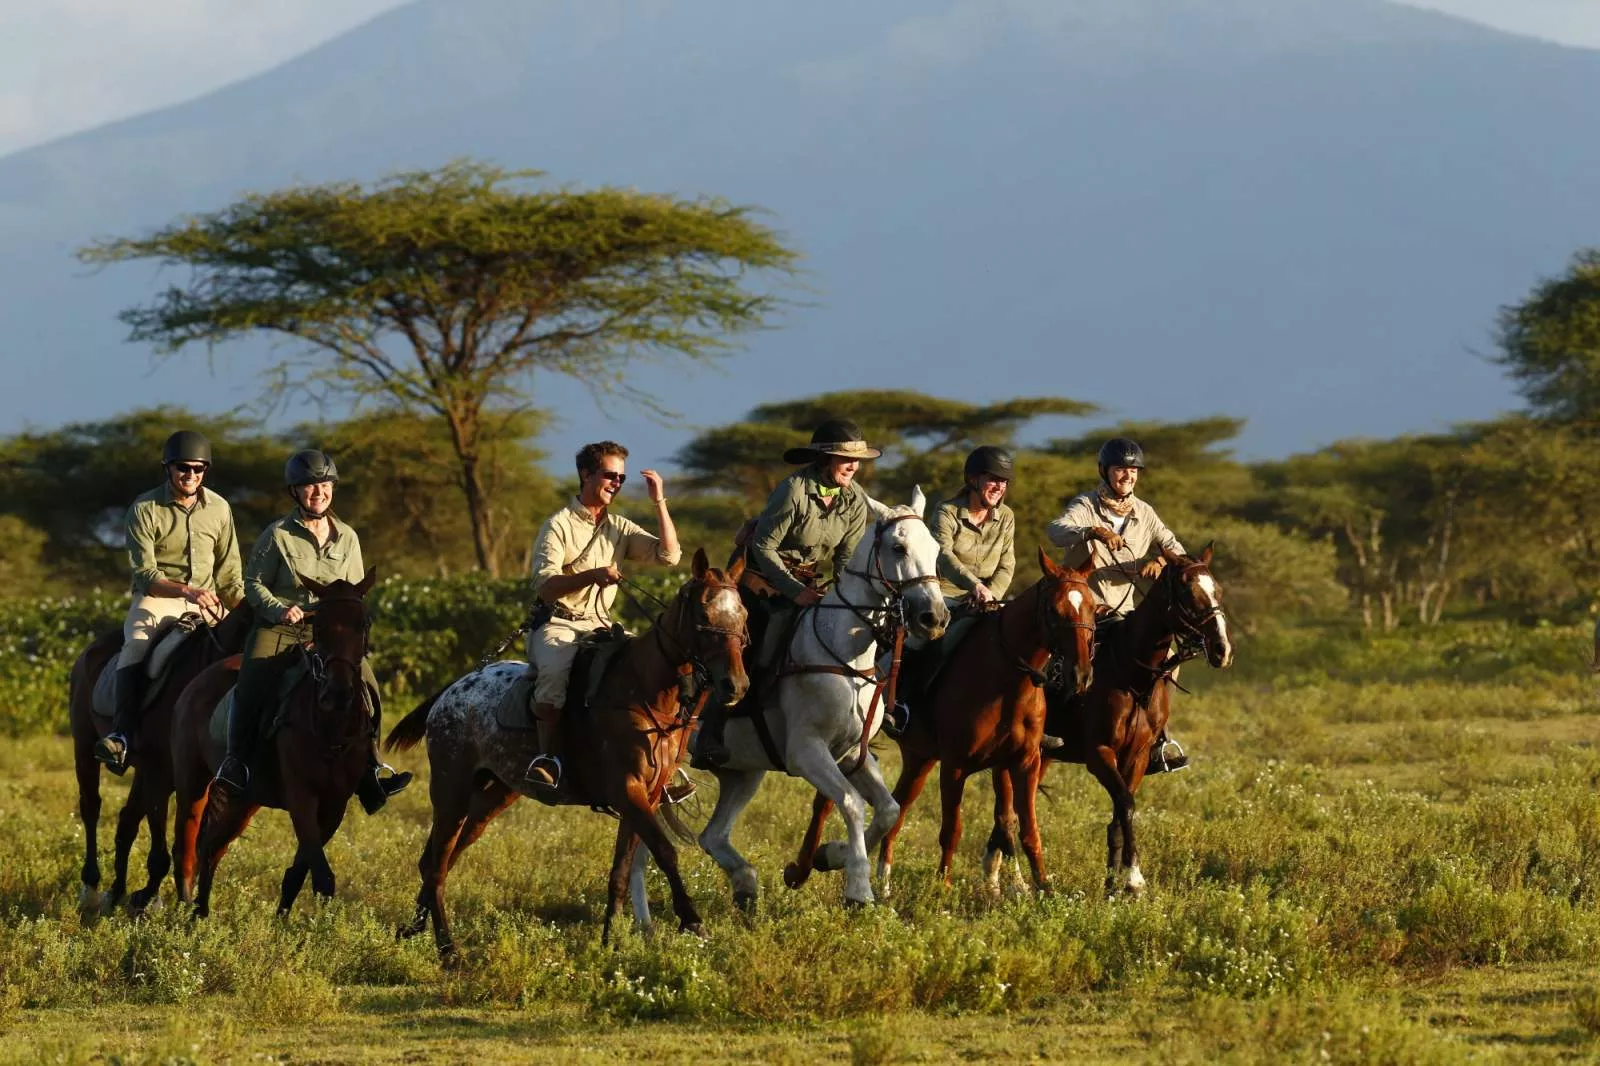 Viwanja Vya Farasi in Tanzania, Africa | Horseback Riding - Rated 0.9